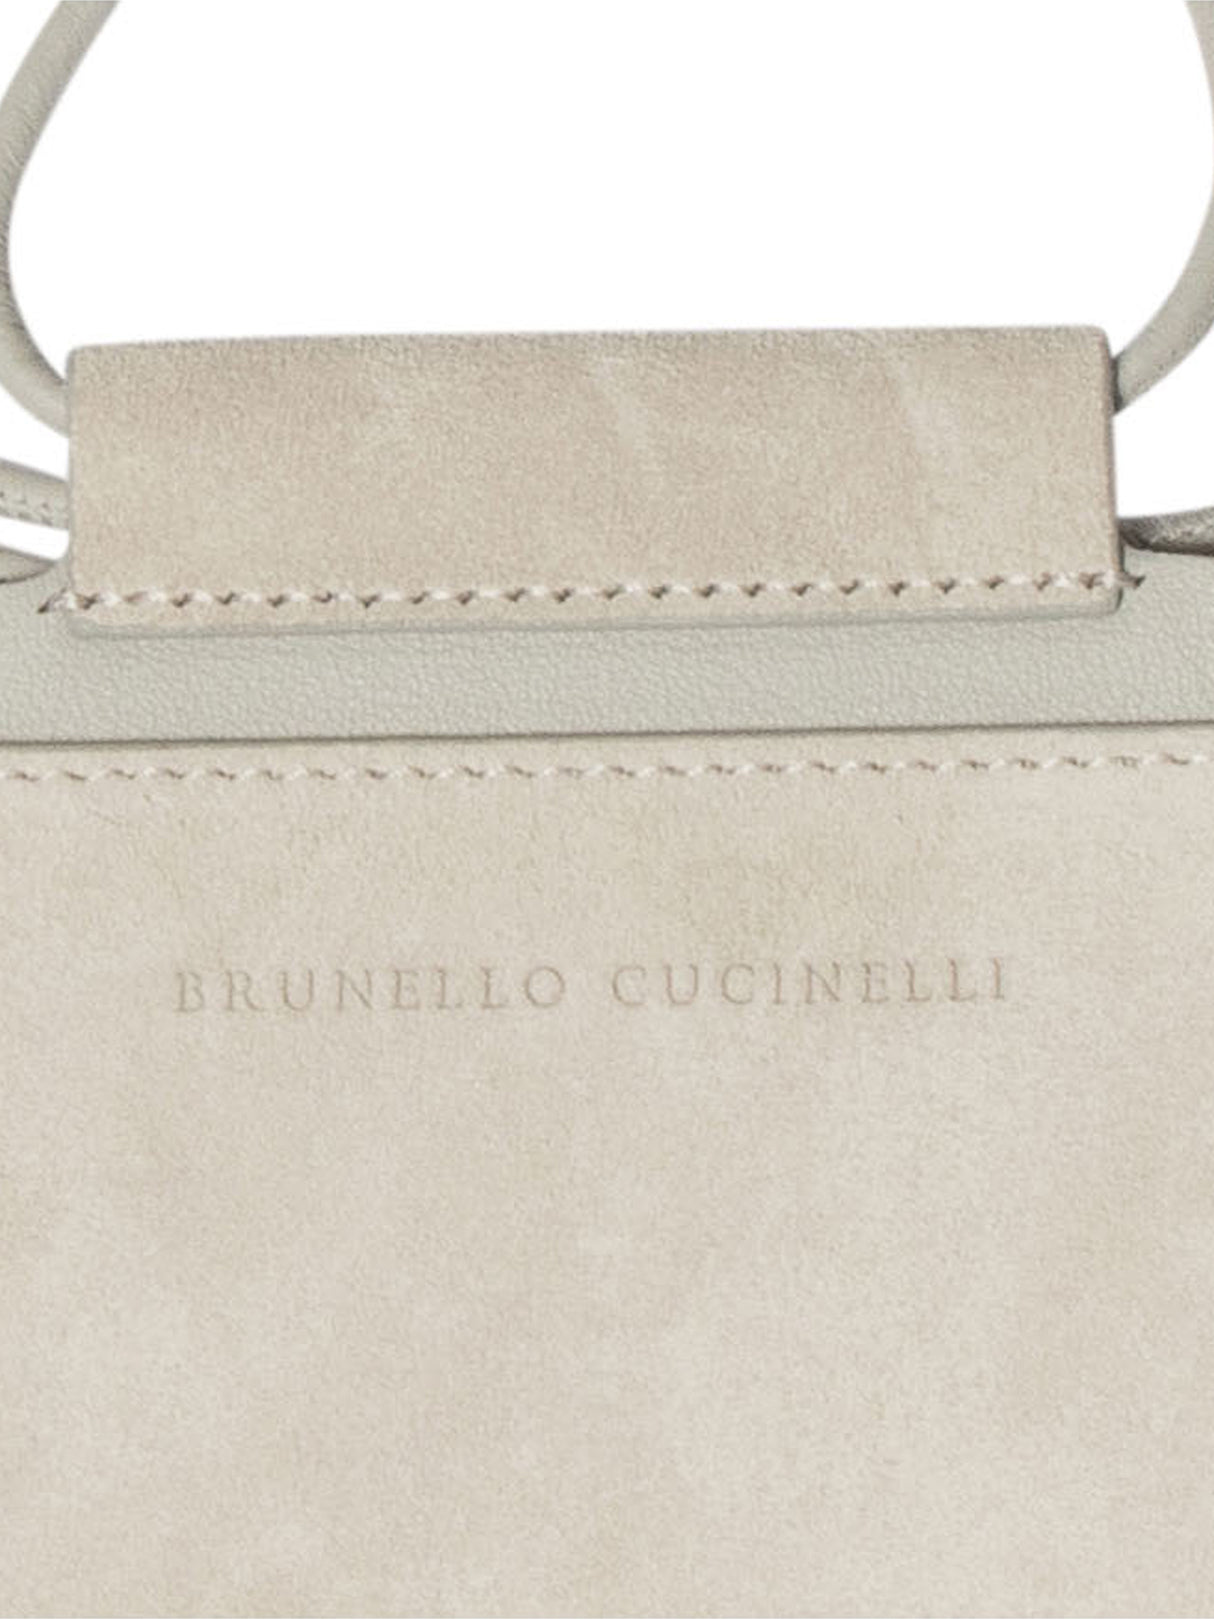 BRUNELLO CUCINELLI PHONE Handbag WITH SHINY TRIM